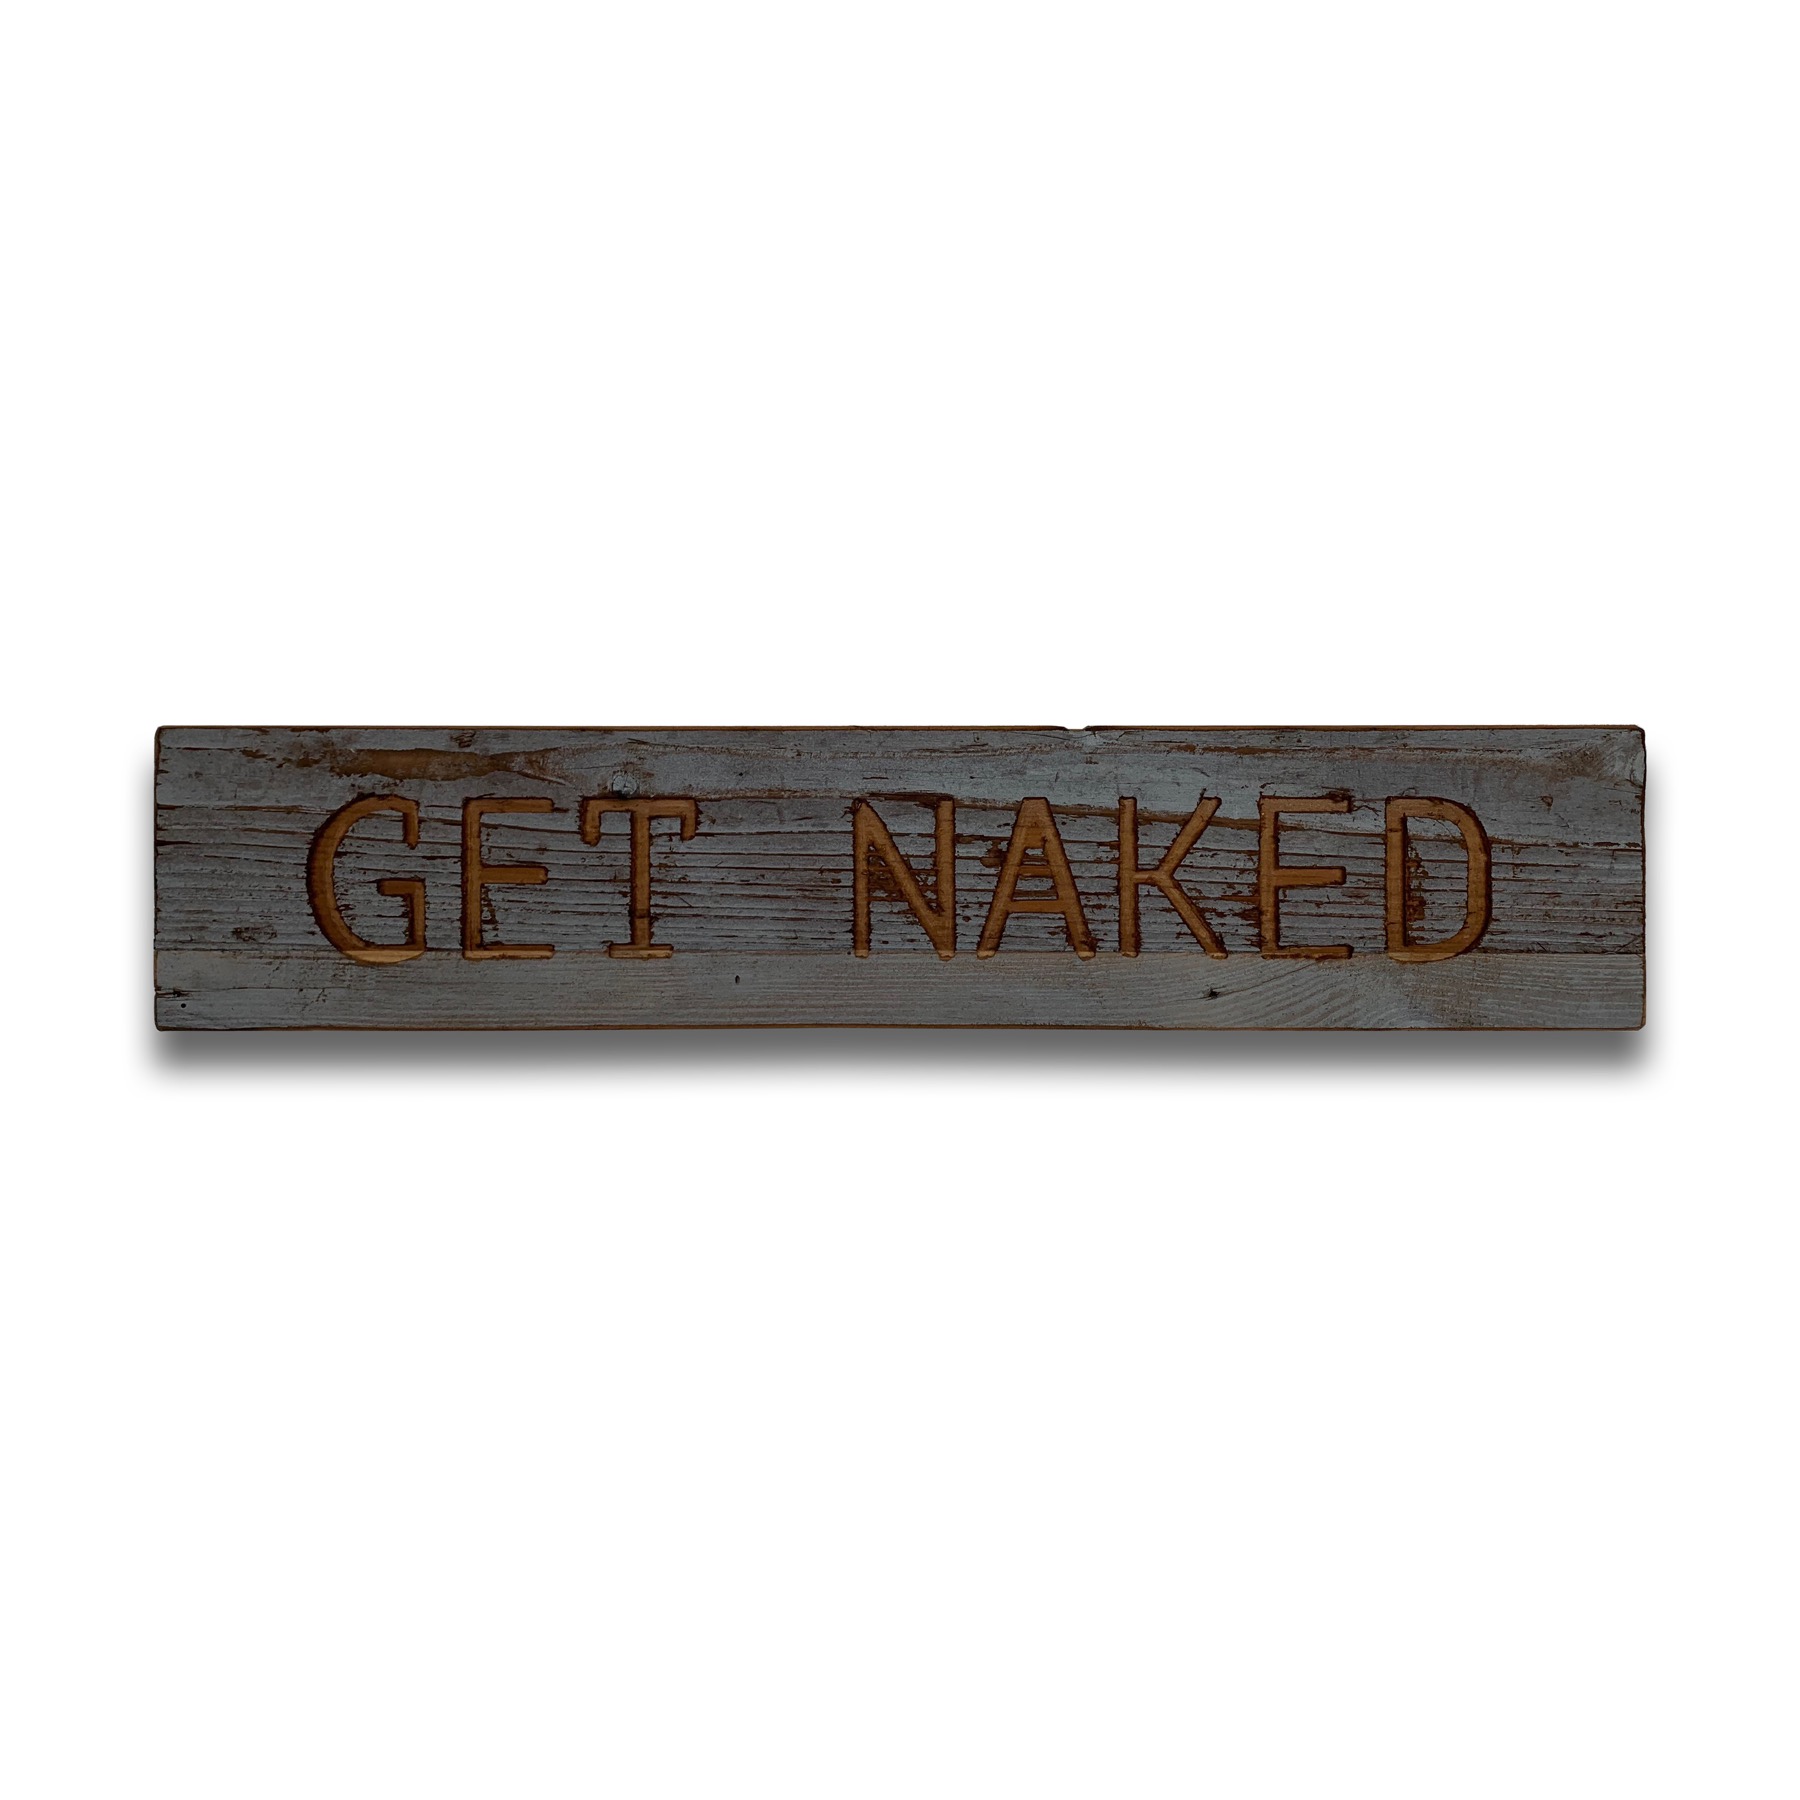 Get Naked Grey Wash Wooden Message Plaque - Image 1